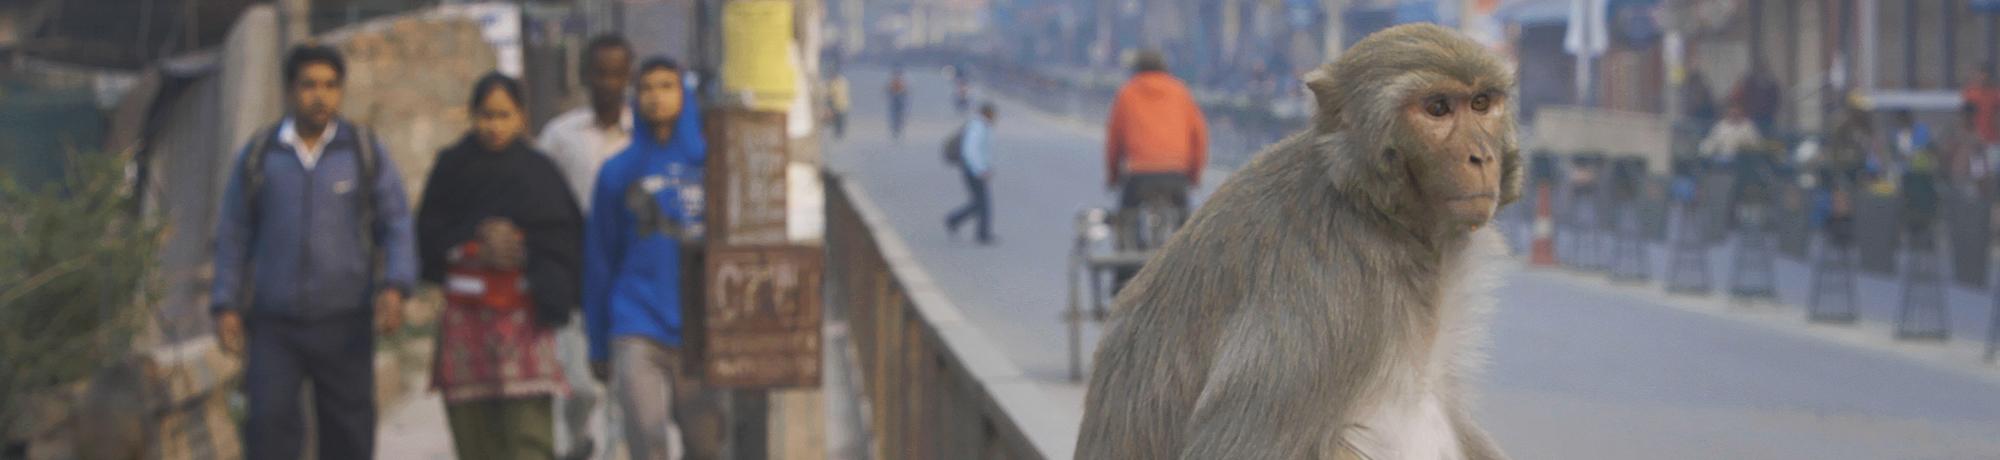 Rhesus macaque in Nepal